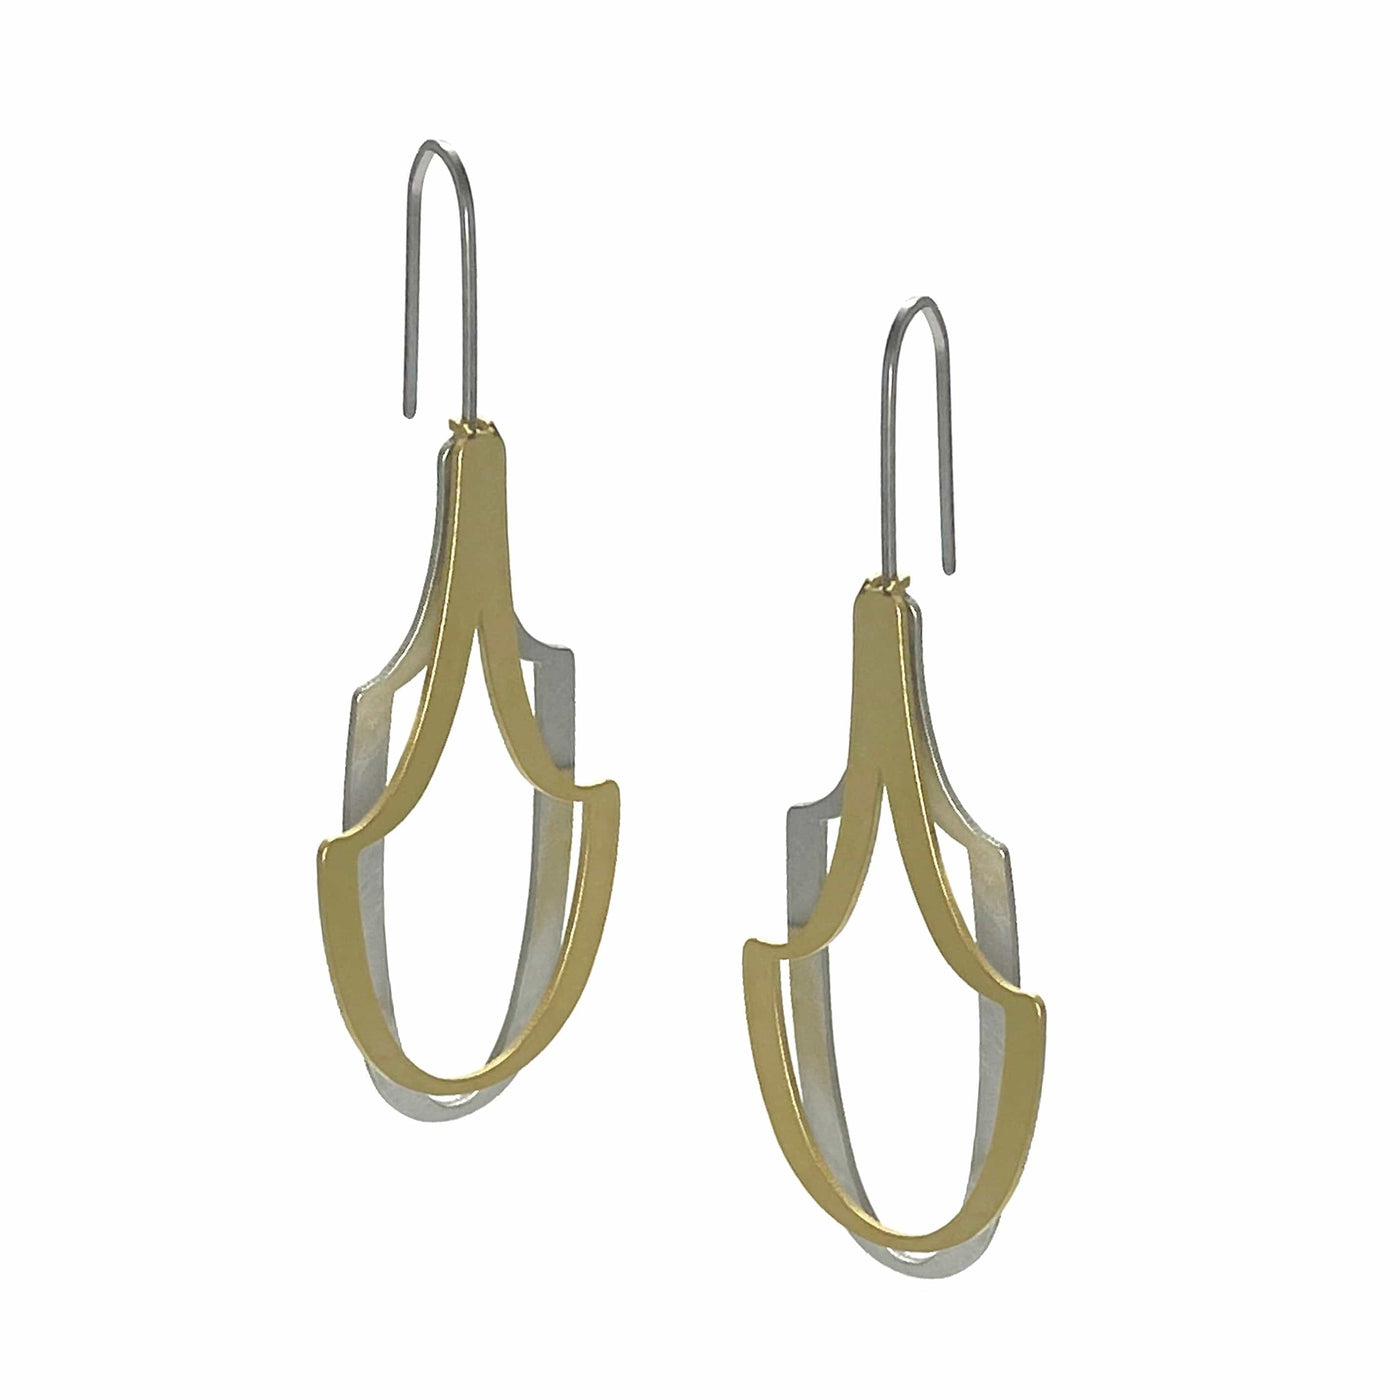 X2 Cloak Earrings - Raw/ Gold - inSync design